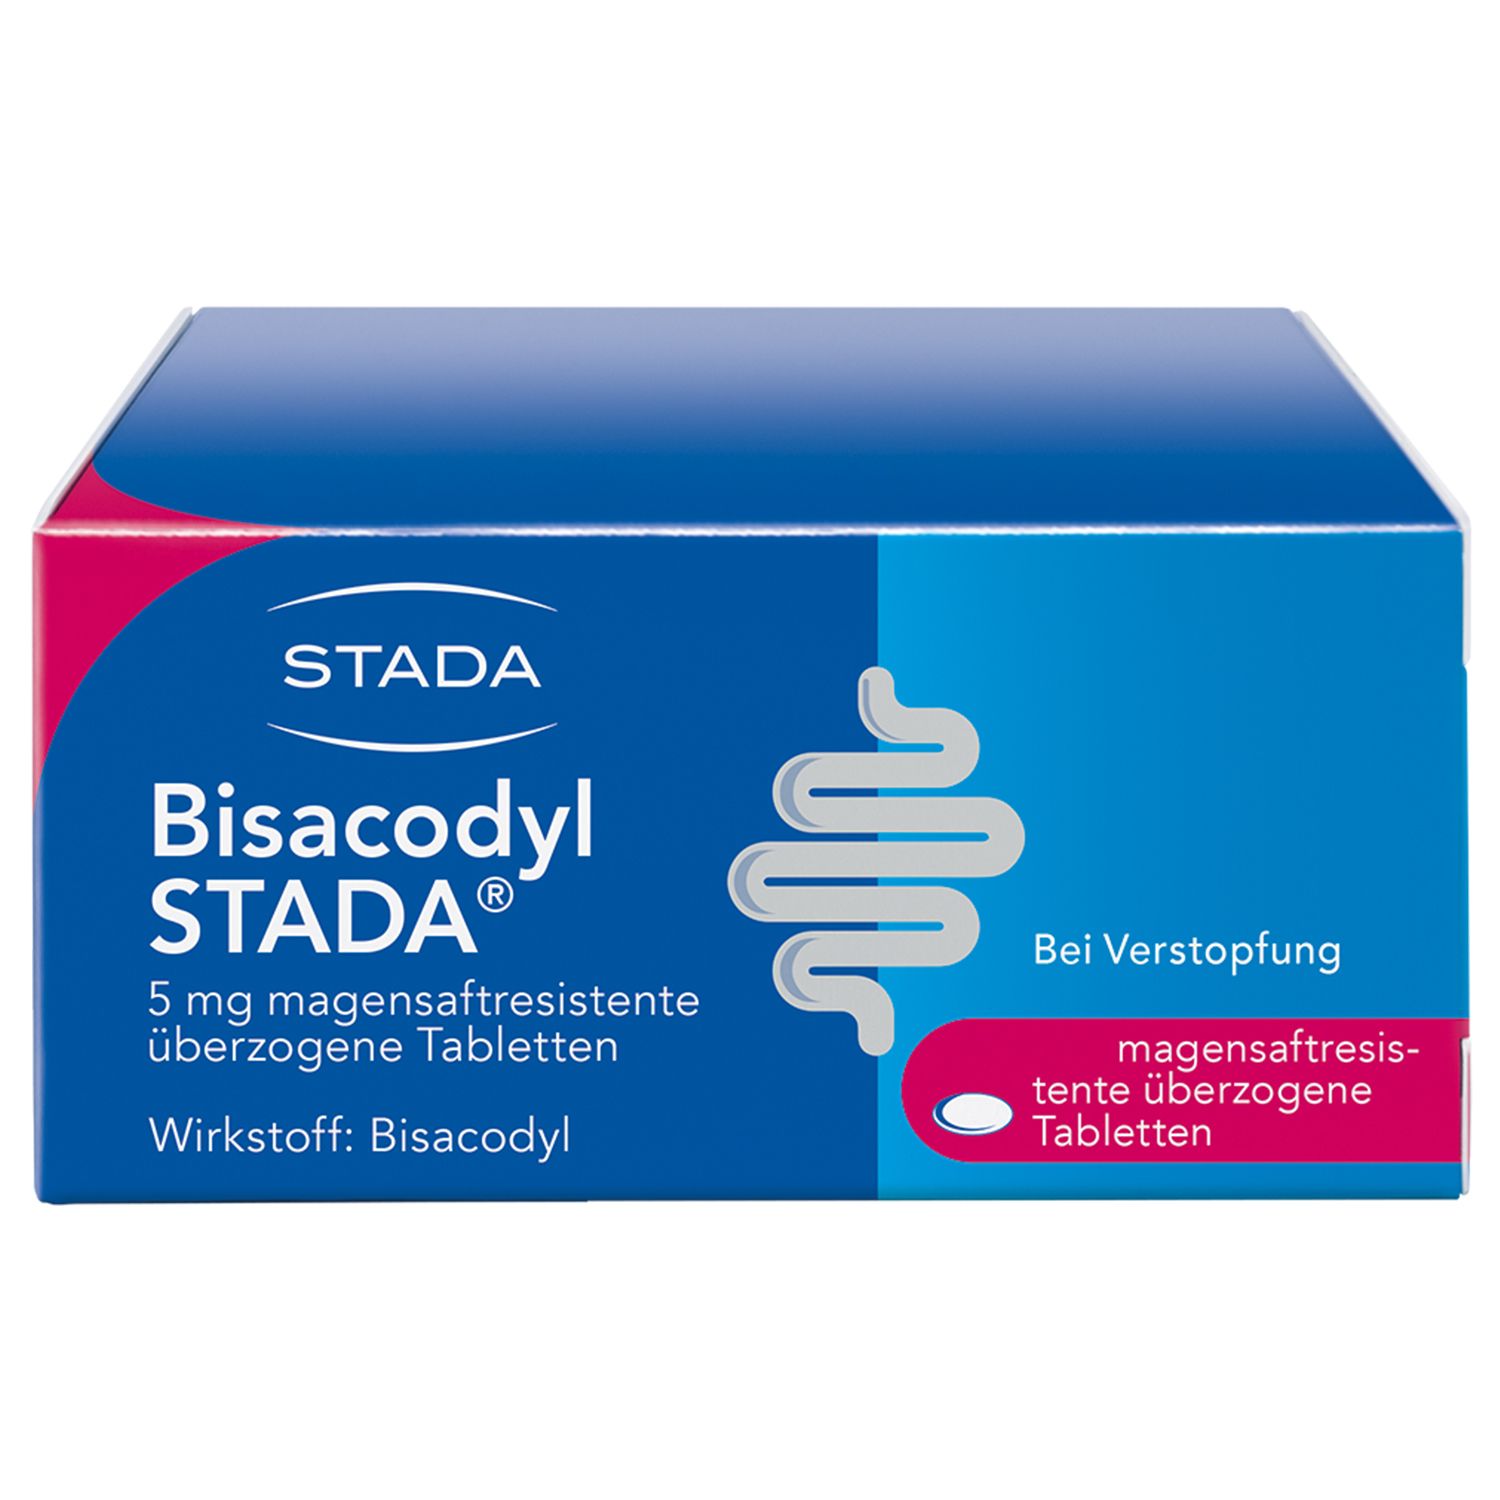 Bisacodyl Stada® 5mg